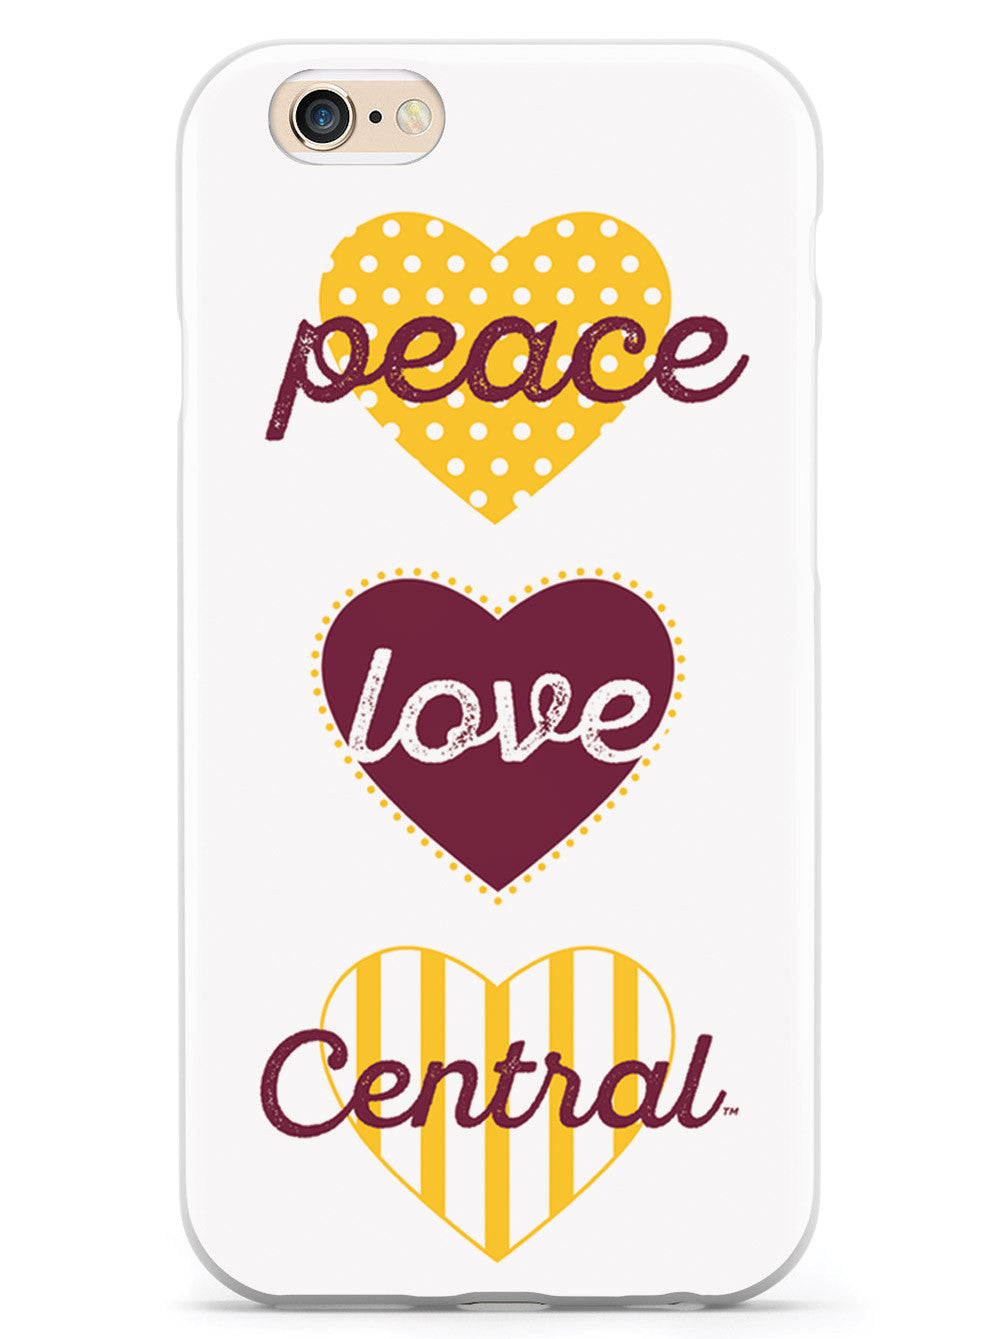 Peace, Love, Central Case